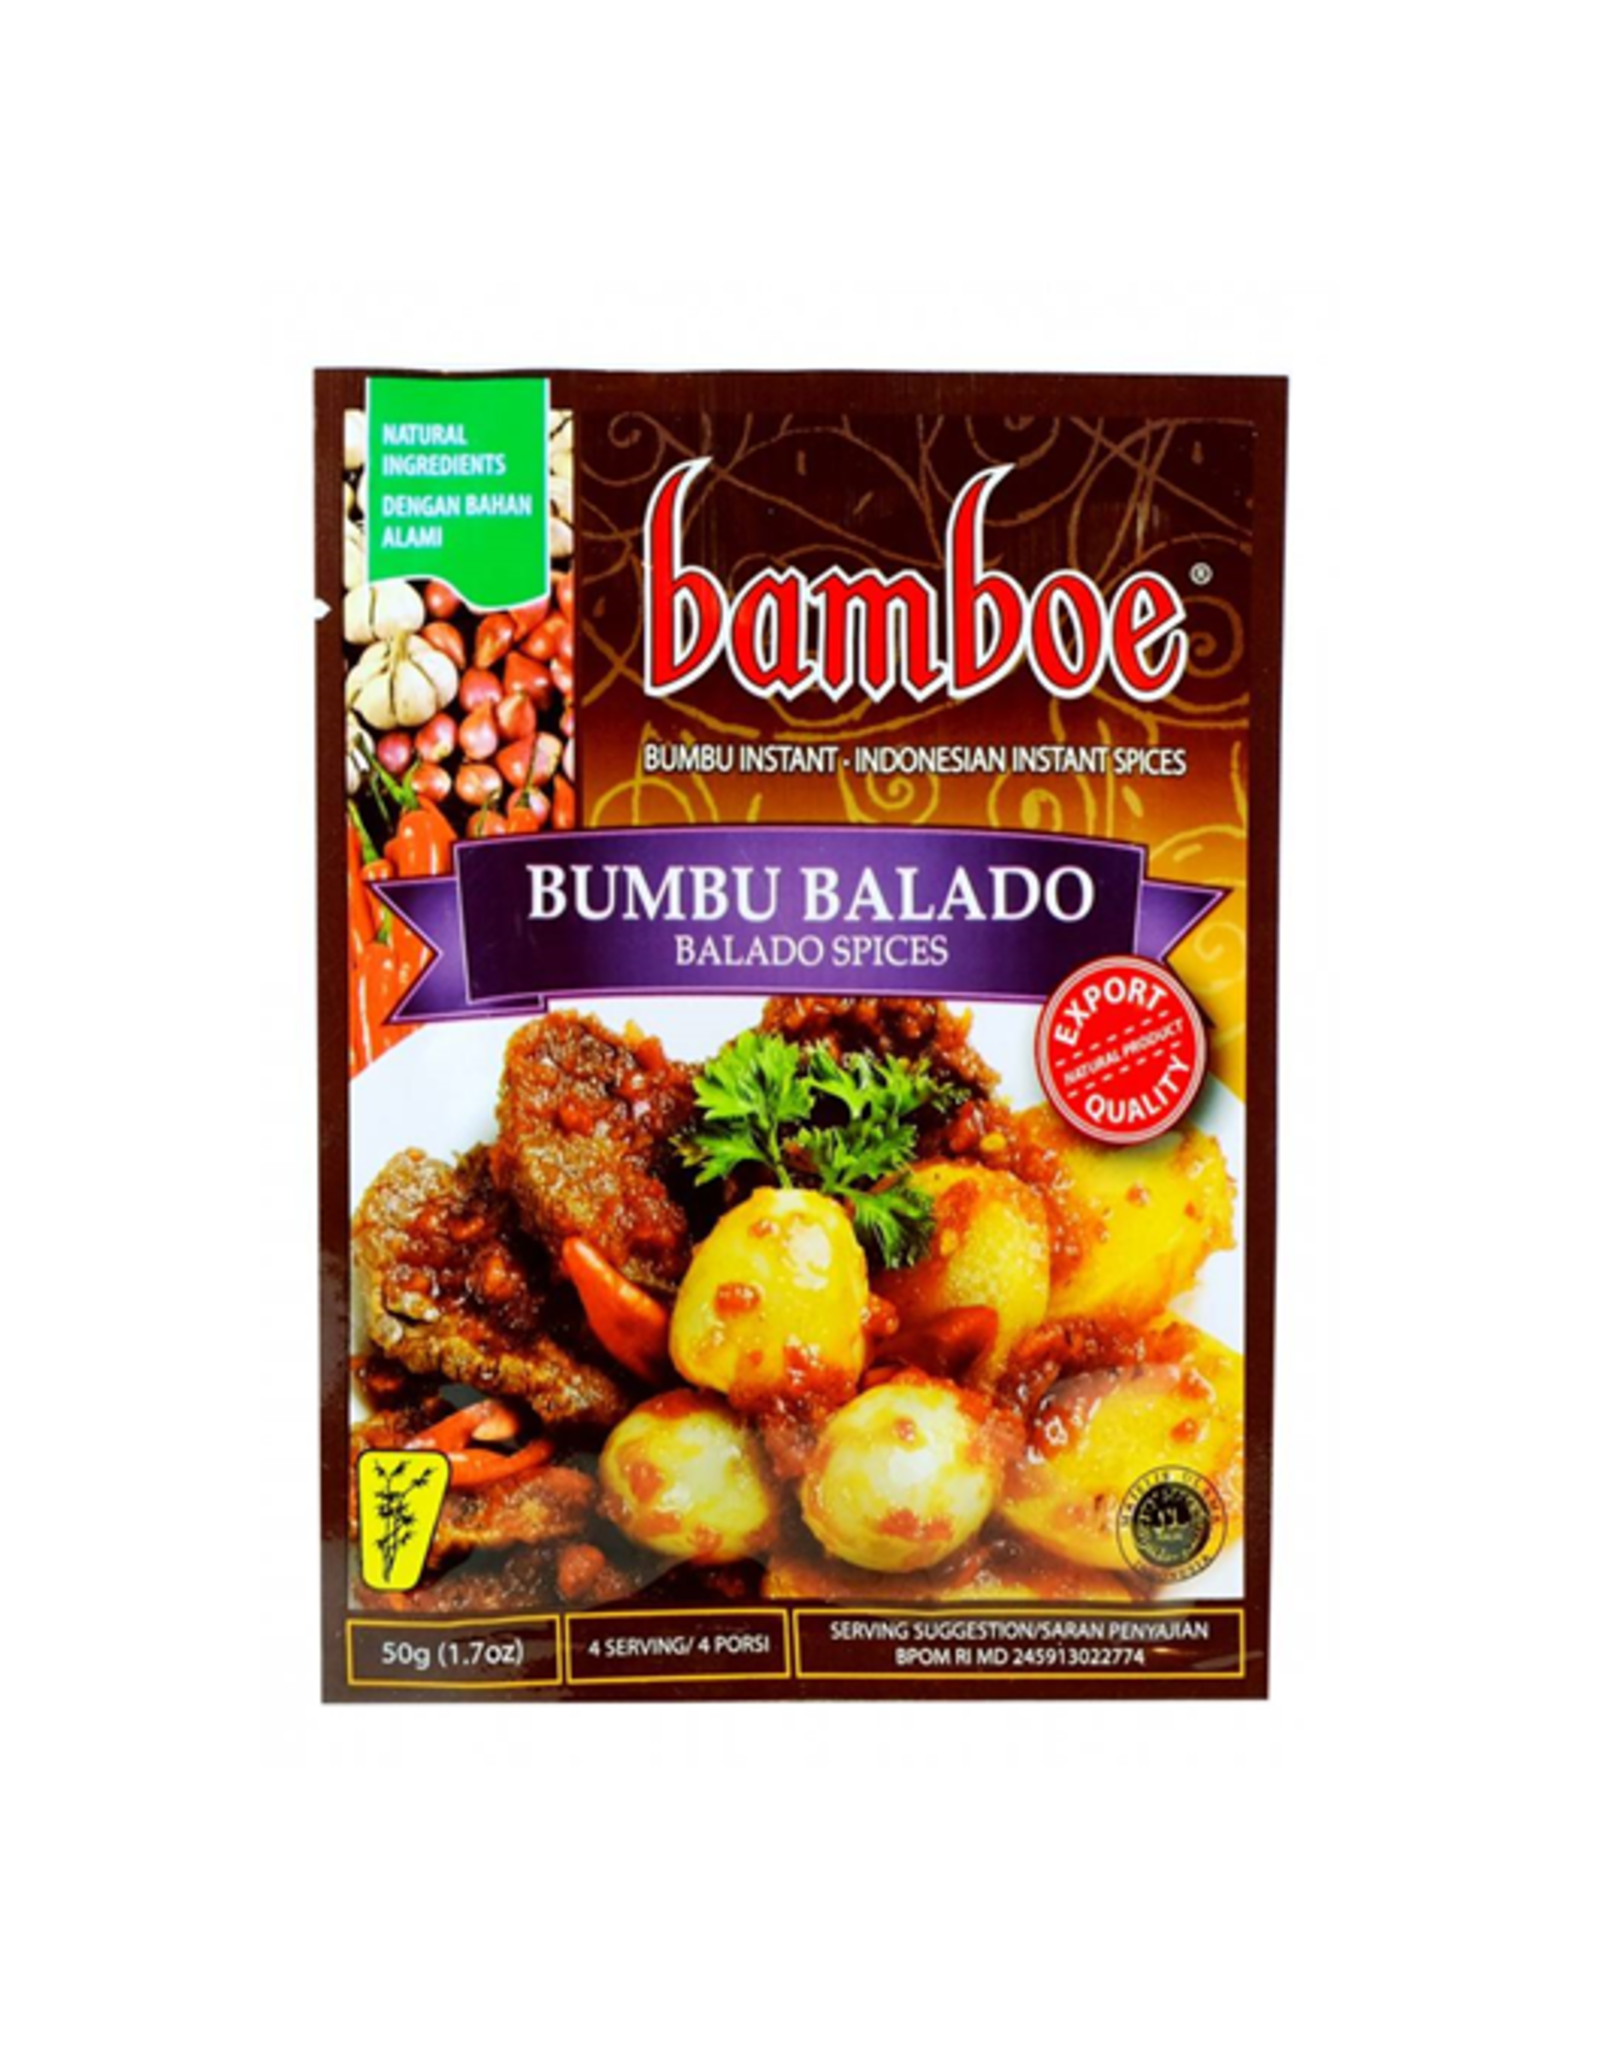 Boemboe Bamboe Bumbu Balado